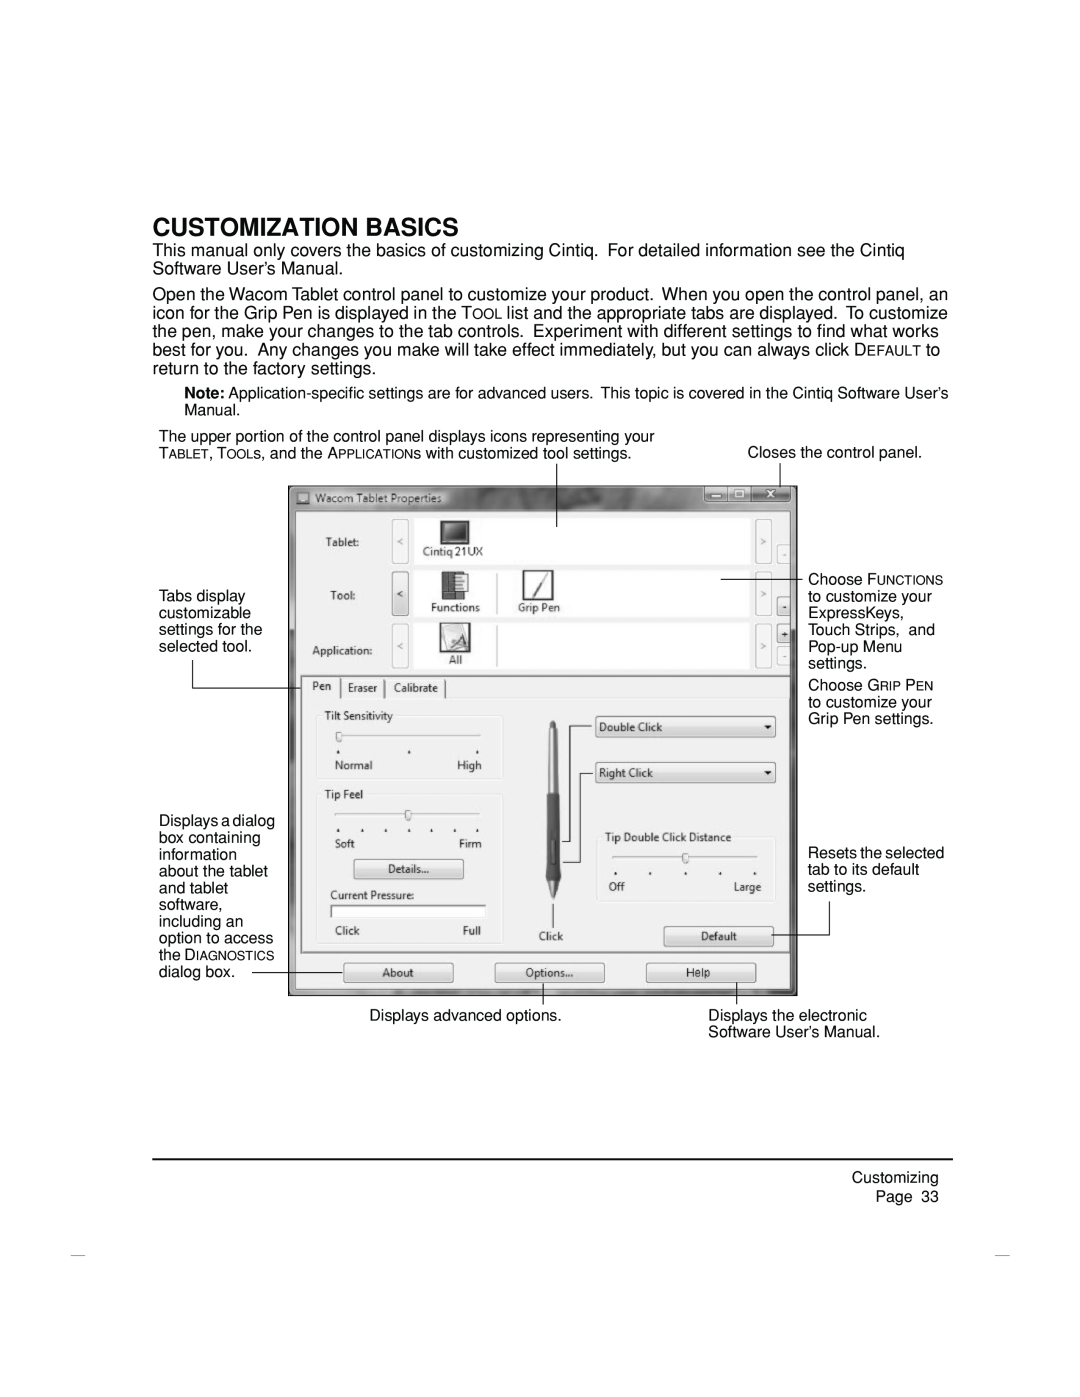 Wacom DTZ-2100D manual Customization Basics, Closes the control panel, Software User’s Manual 